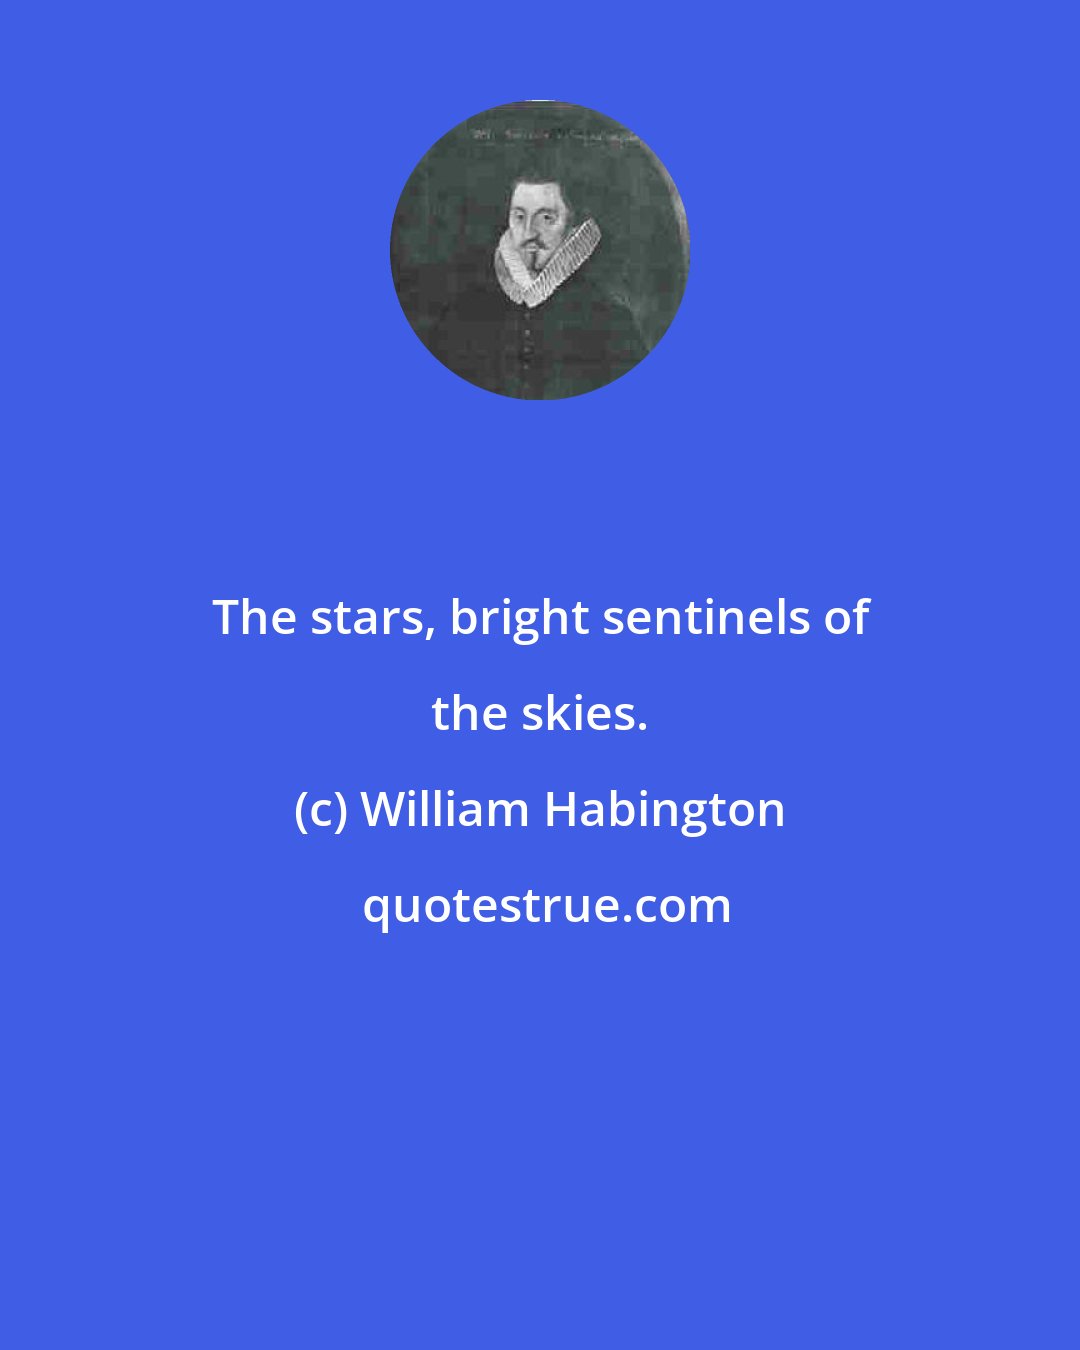 William Habington: The stars, bright sentinels of the skies.